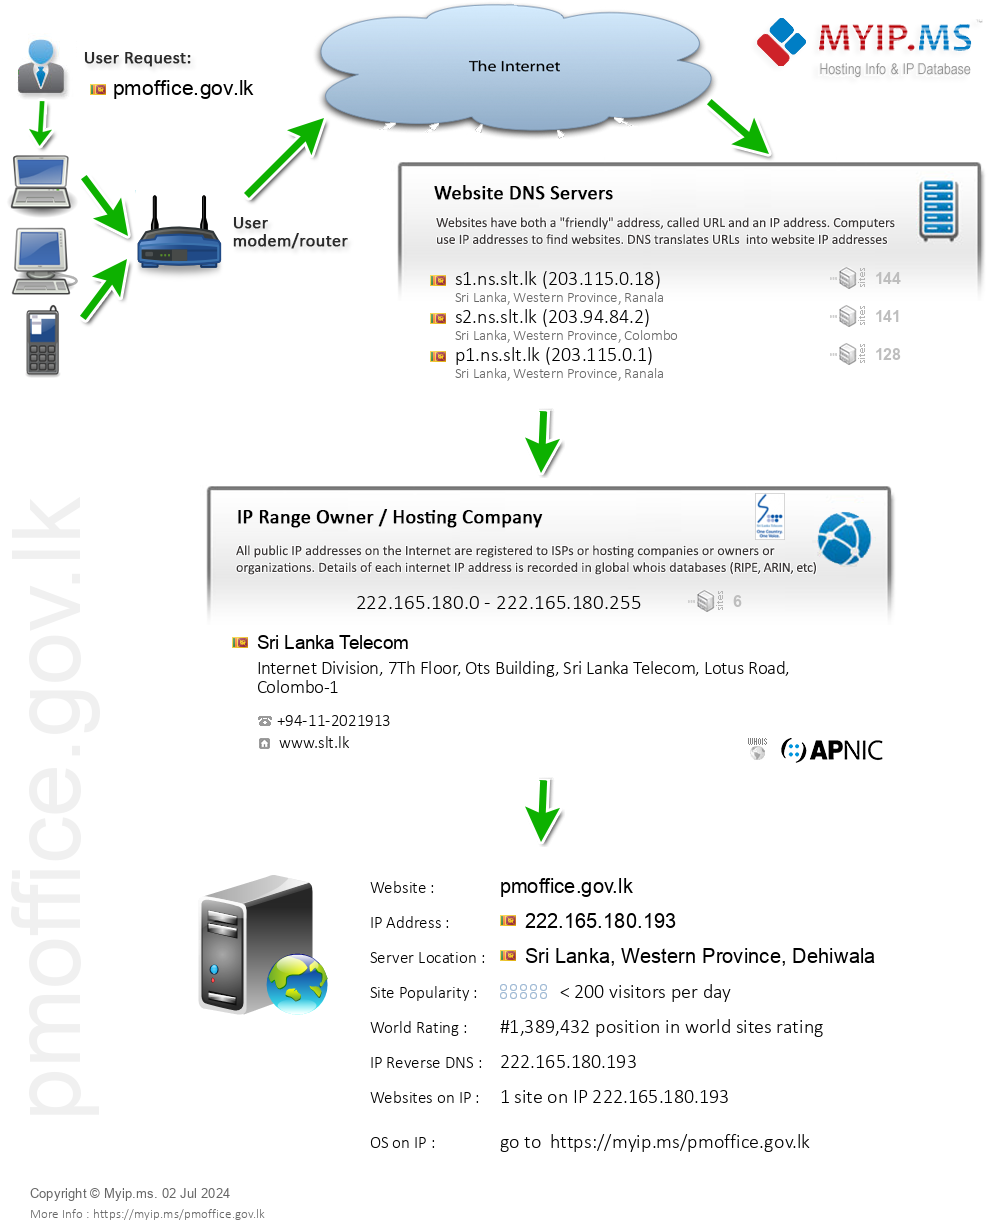 Pmoffice.gov.lk - Website Hosting Visual IP Diagram